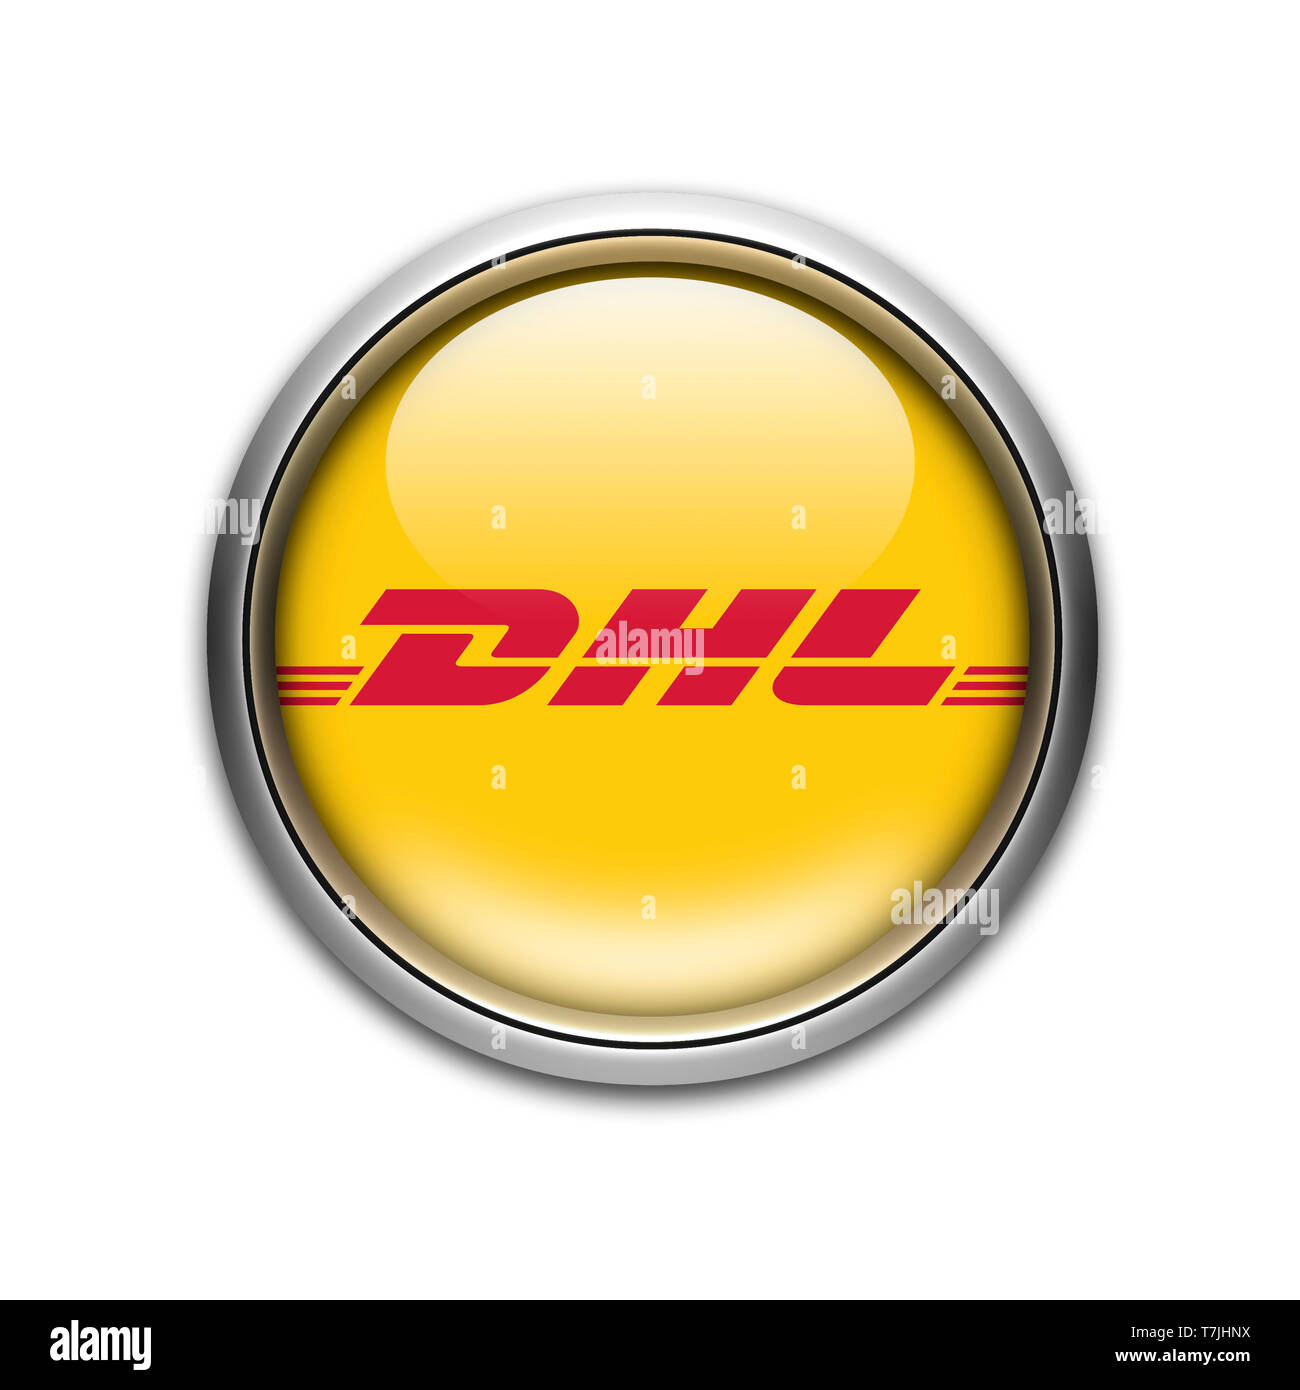 DHL logo Stock Photo